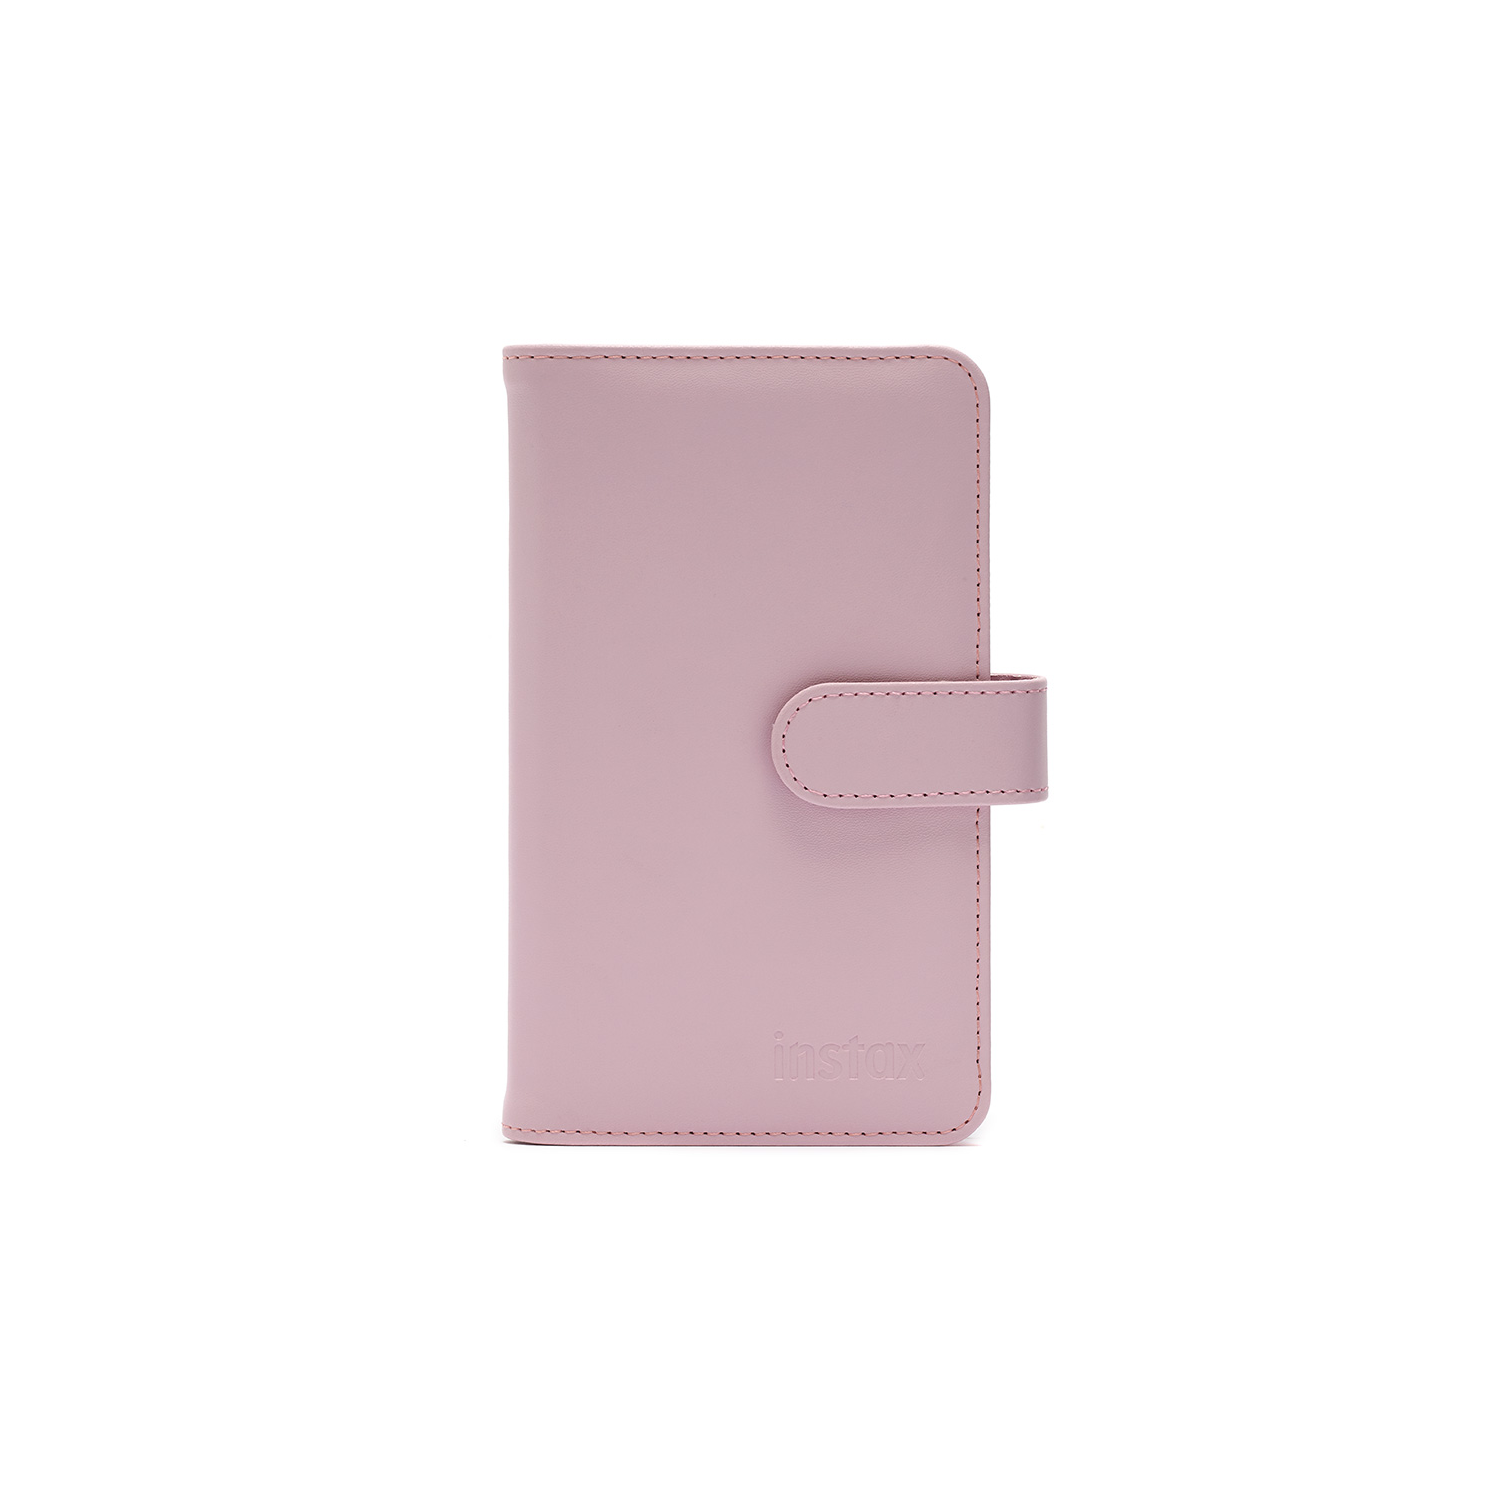 Fujifilm Instax mini album Blossom Pink